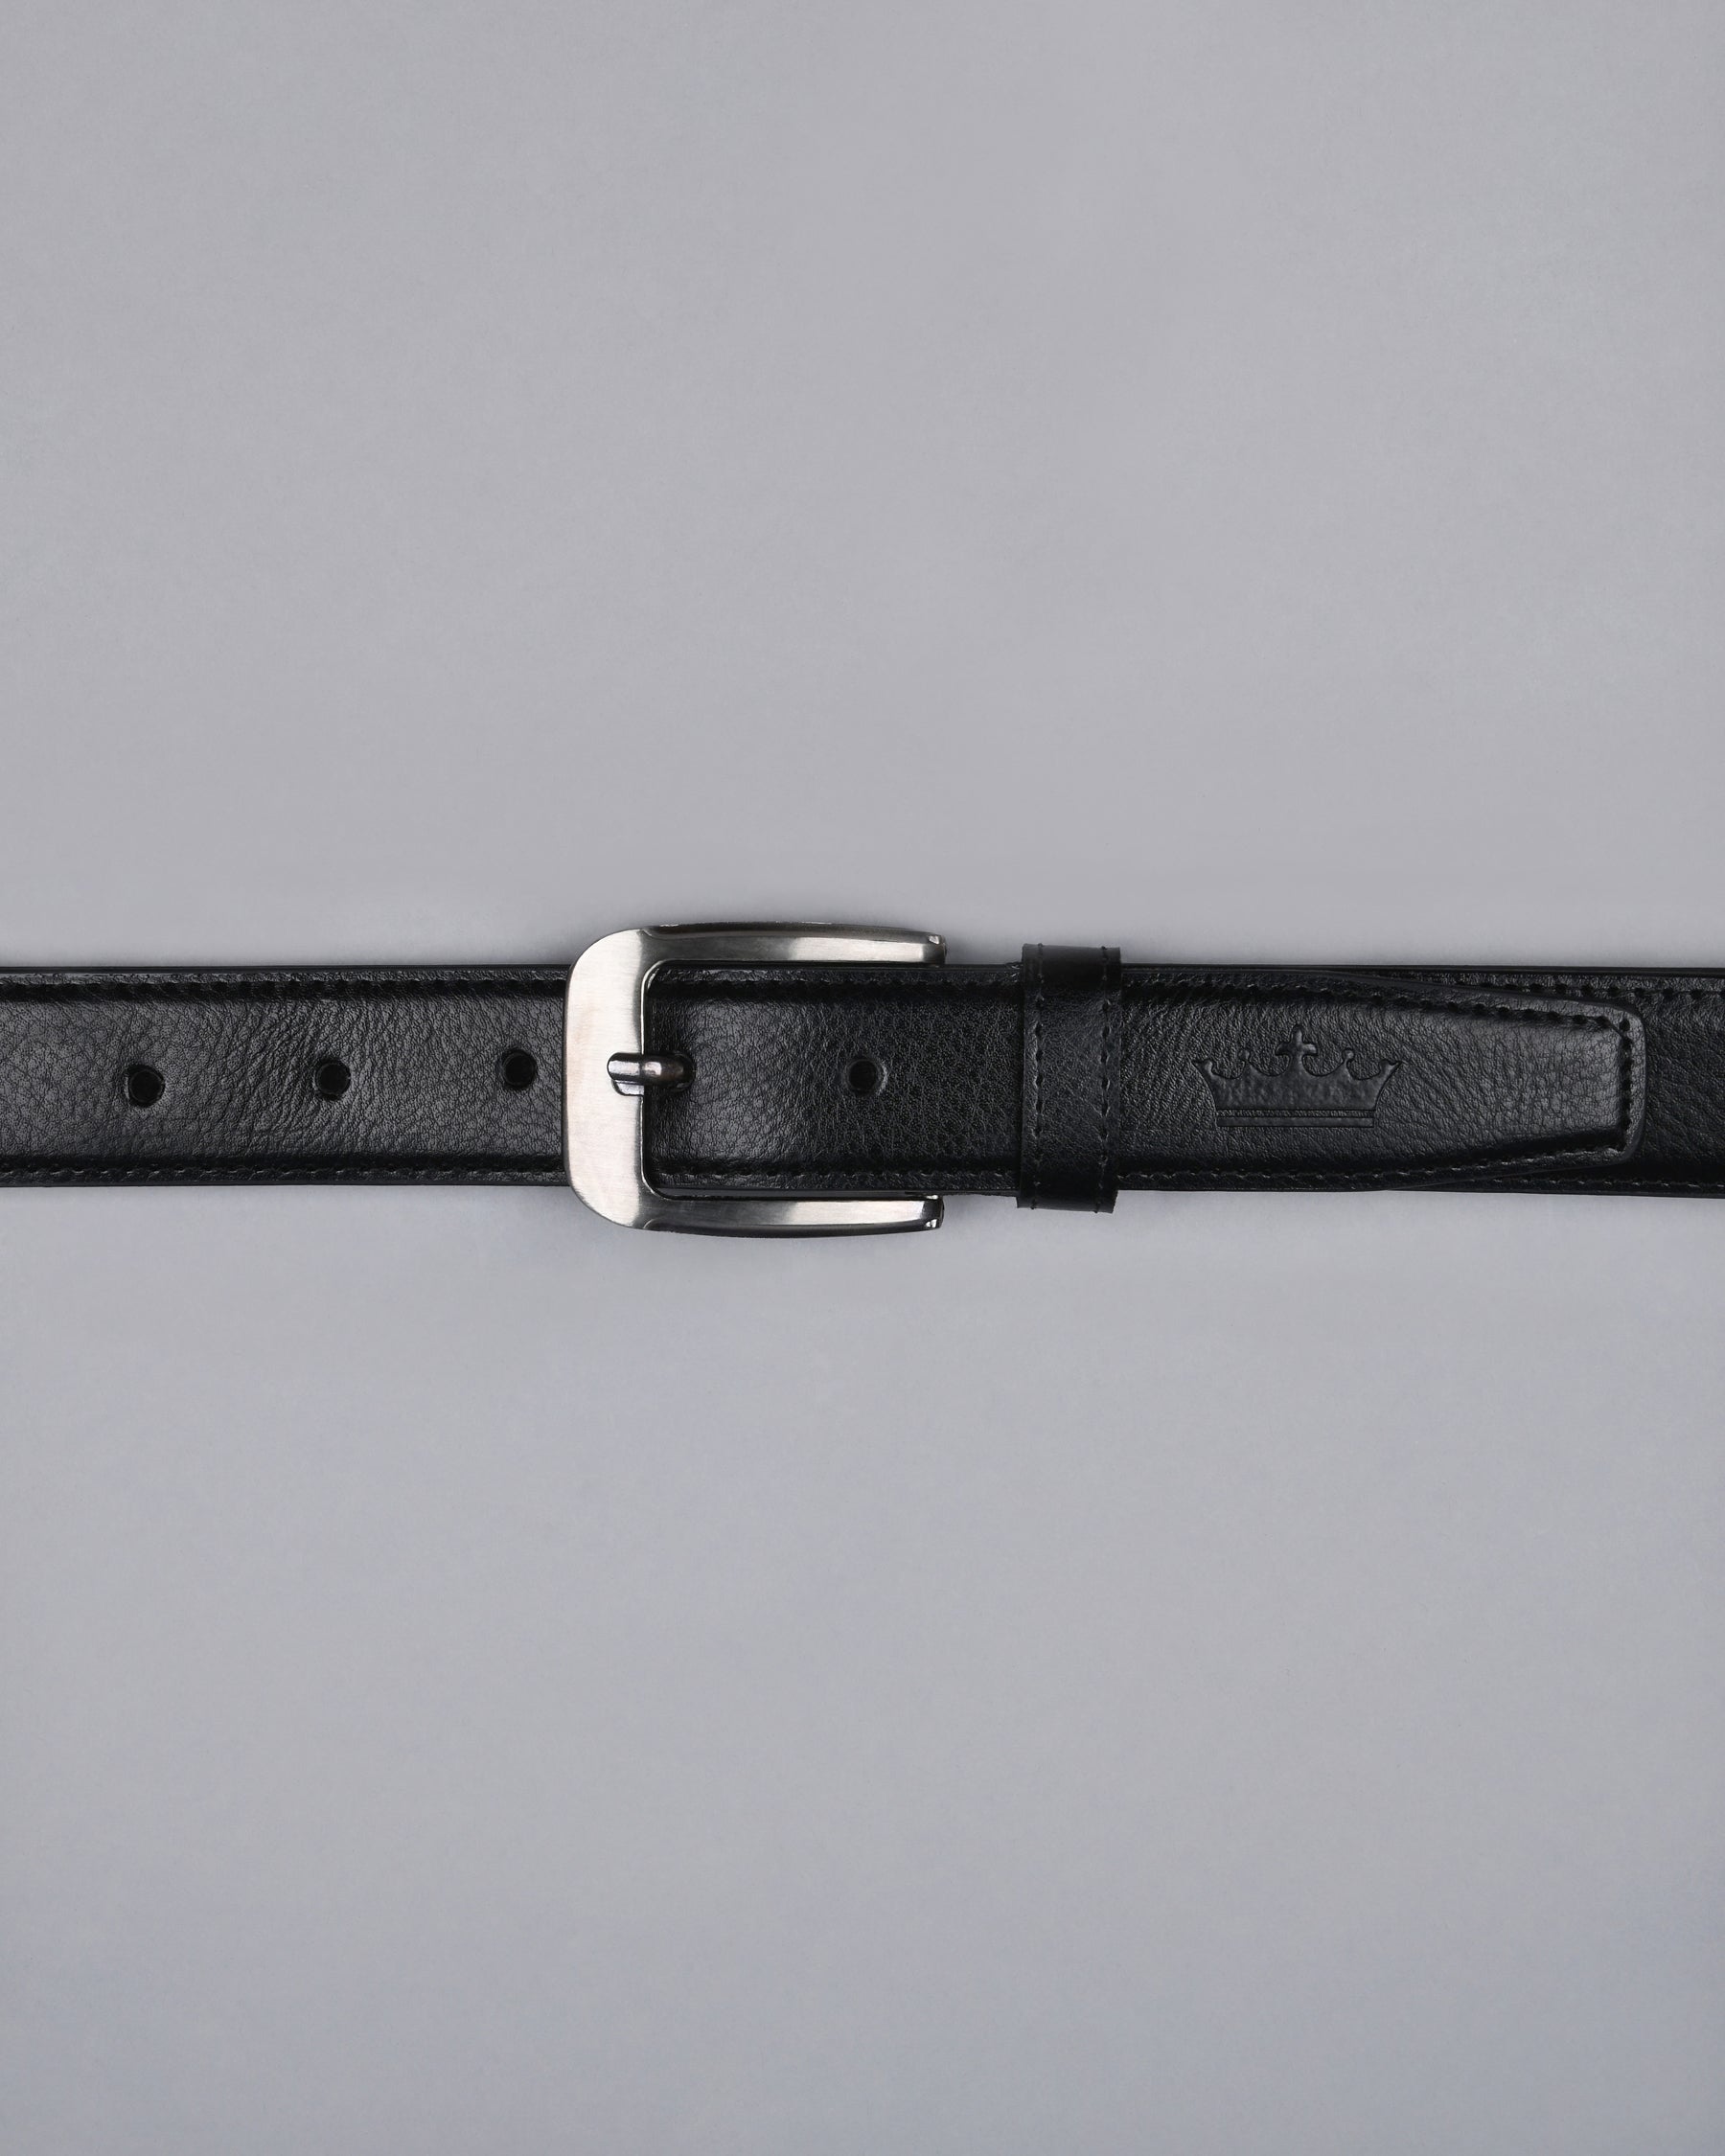 Jade Black Subtle Textured Vegan Leather Handcrafted Belt BT05-28, BT05-30, BT05-32, BT05-34, BT05-36, BT05-38